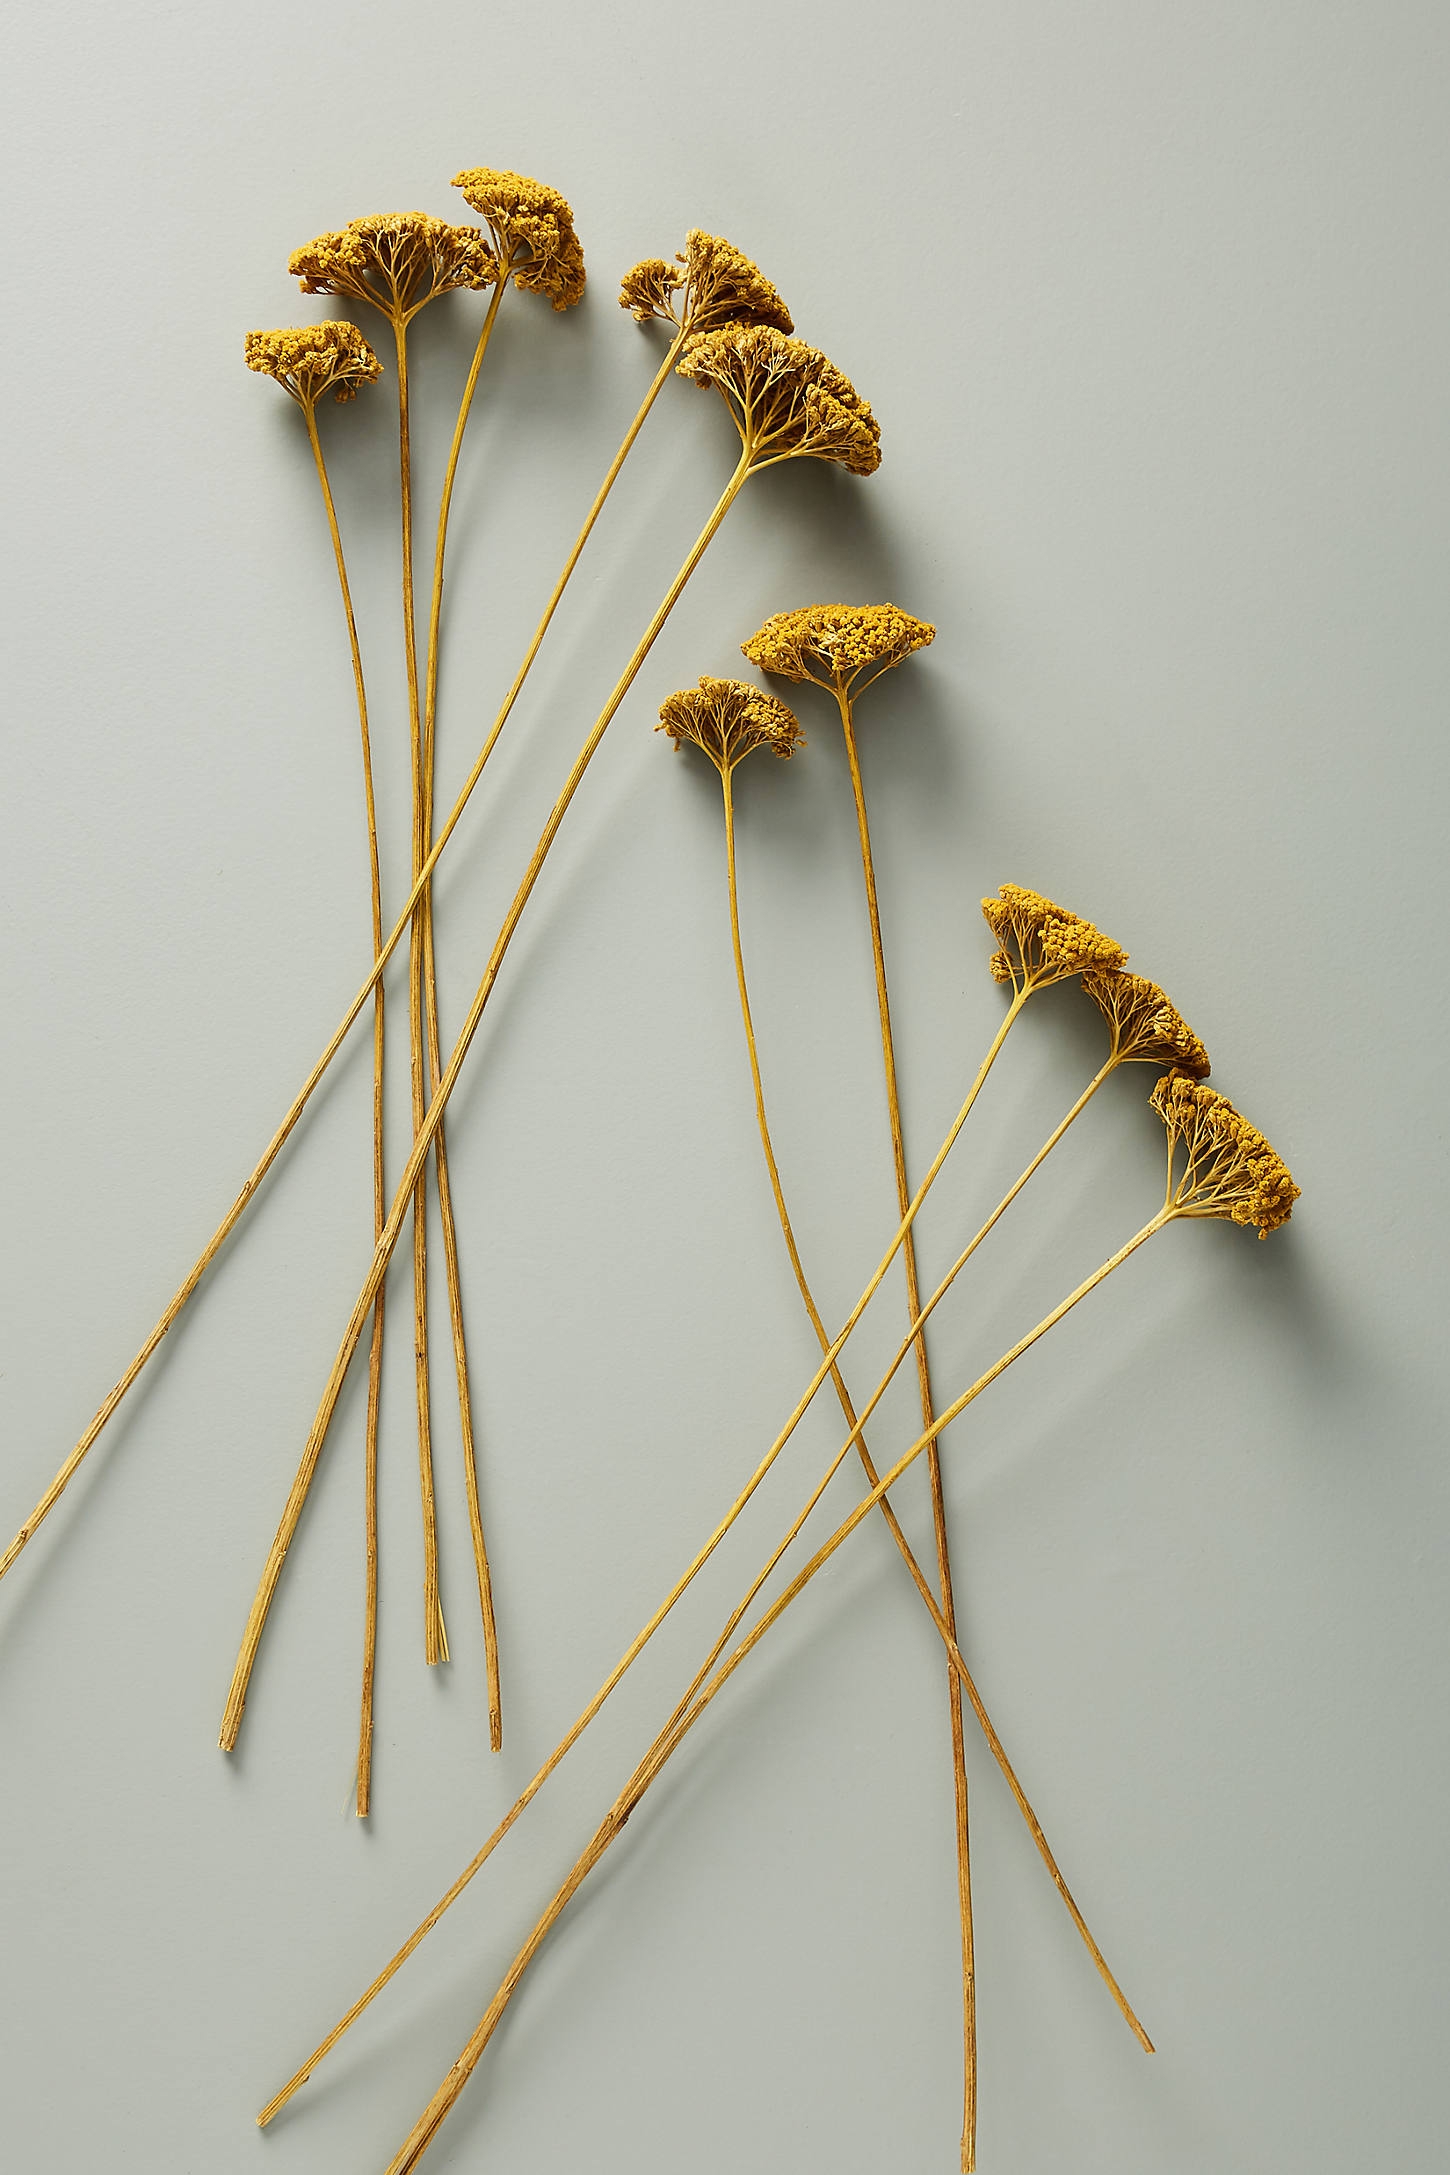 Dried Yarrow Bouquet - Image 0